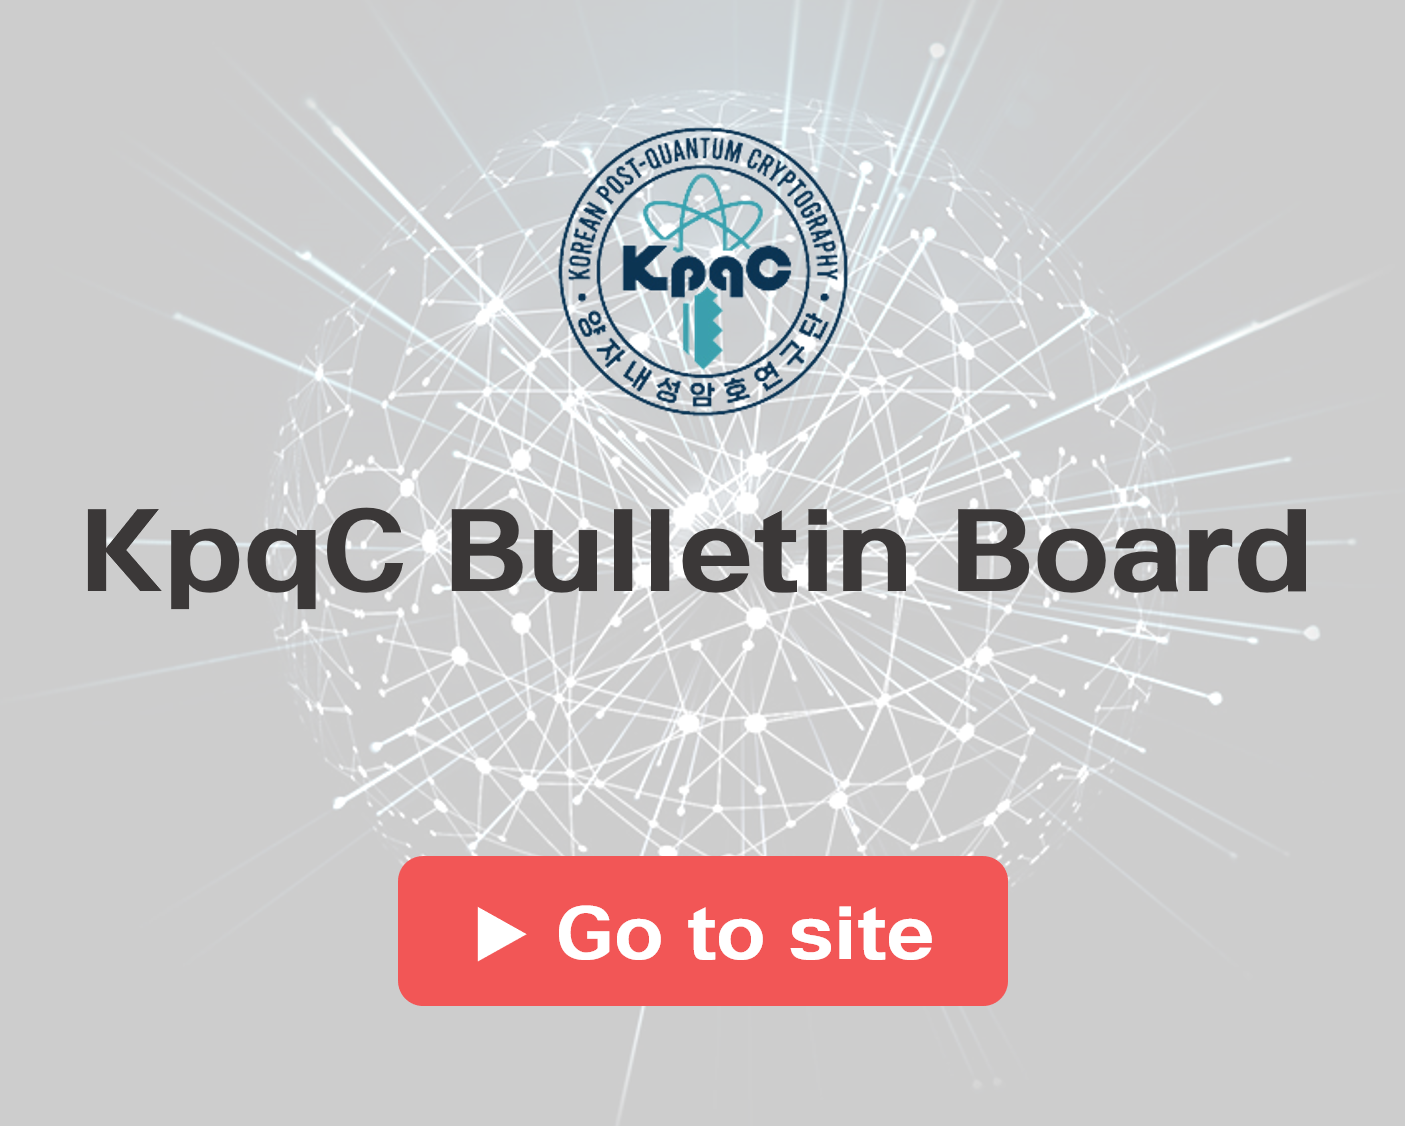 KpqC Bulletin Board